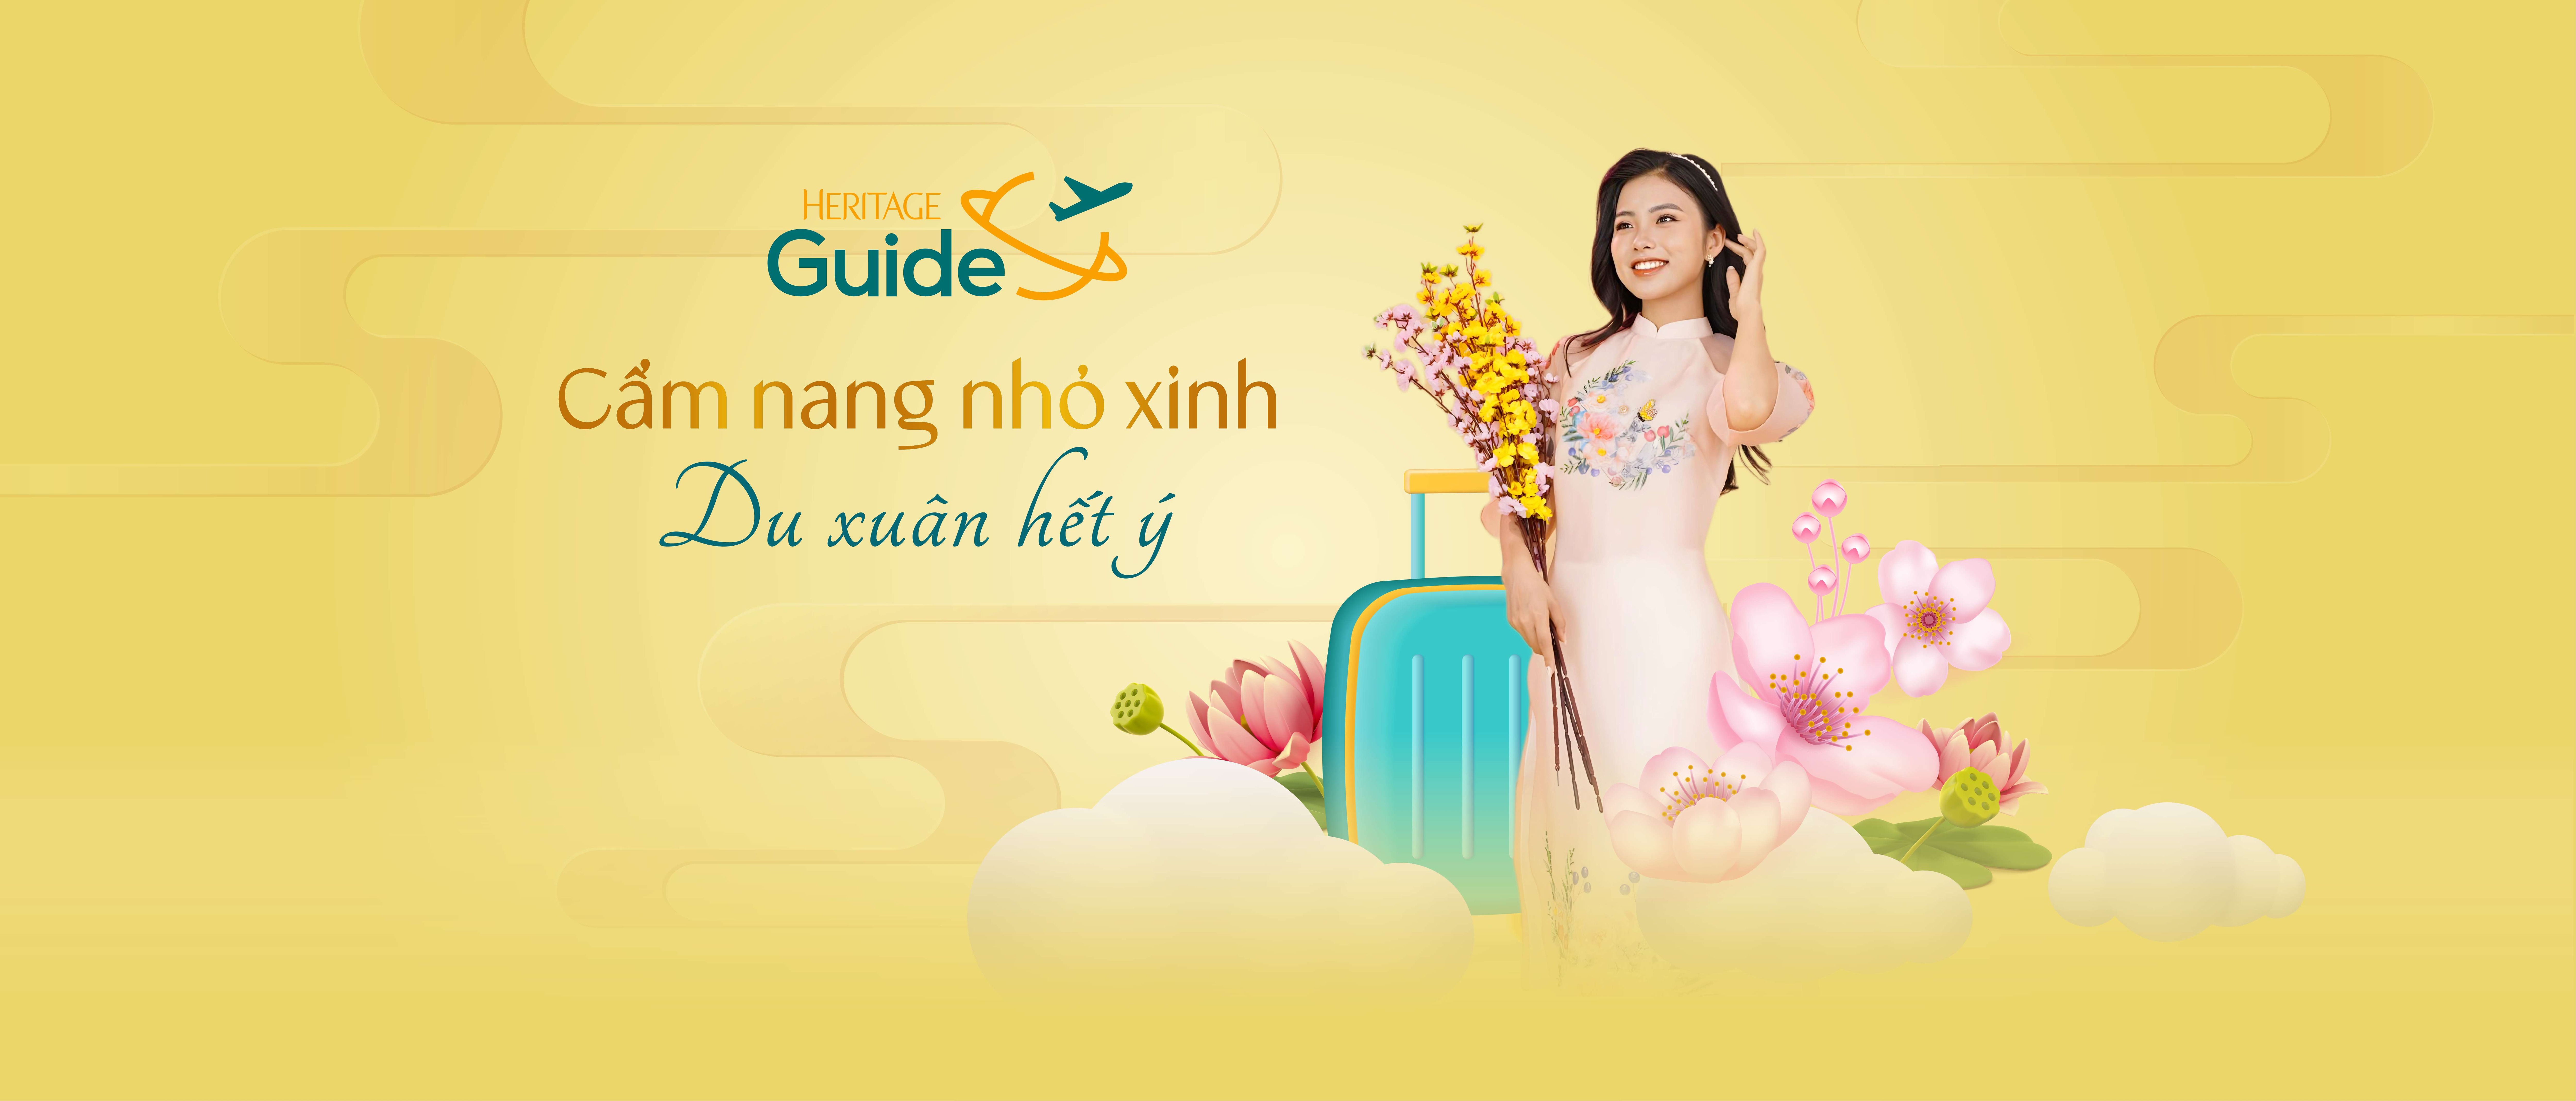 ve-may-bay-Tet-vietnam-airlines